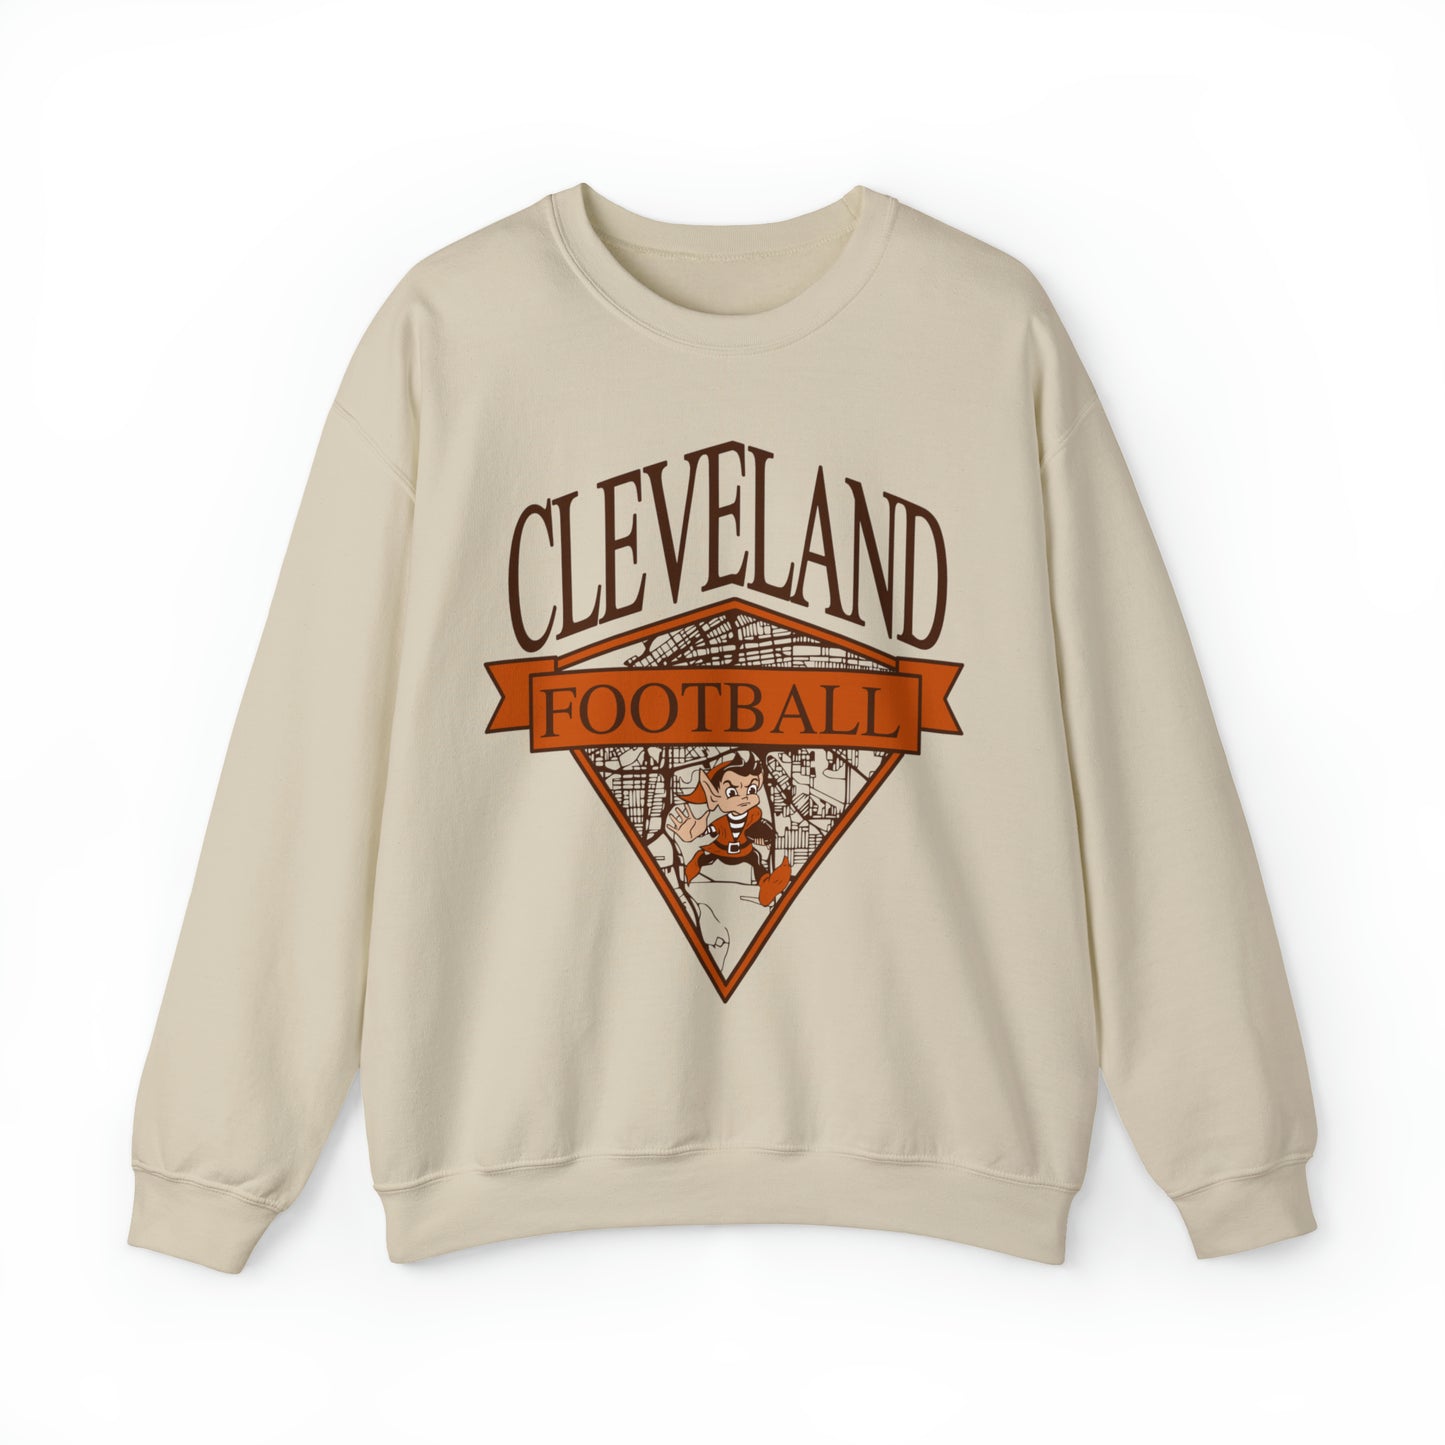 Vintage Cleveland Browns Sweatshirt - 90's NFL Football Map of Cleveland Browns Crewneck - NFL Football Sweatshirt